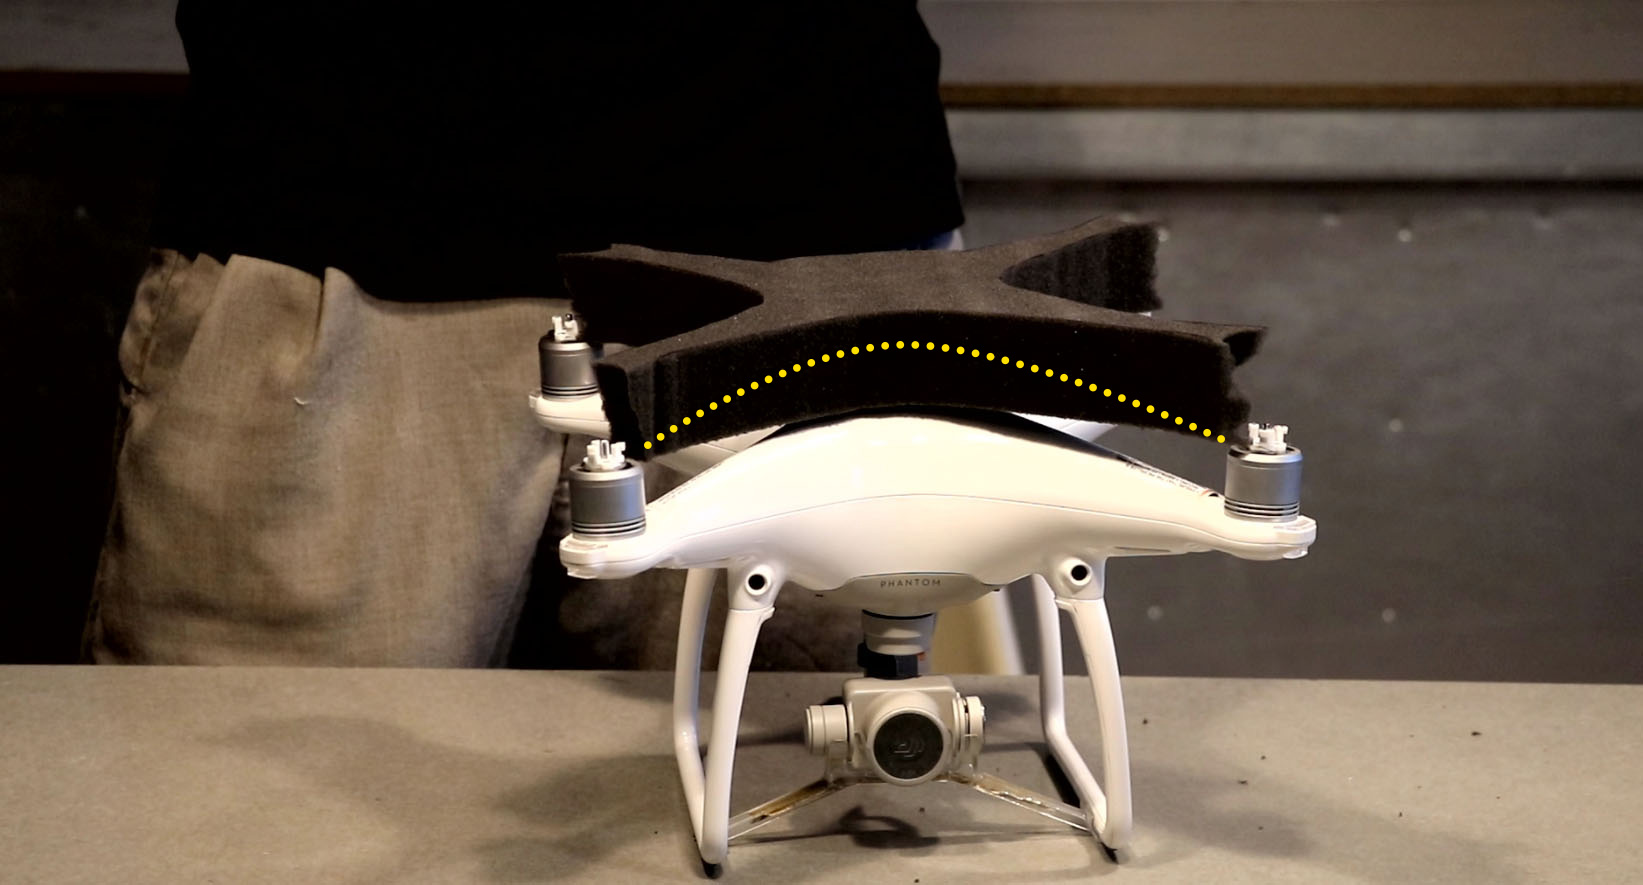 DIY Drone Case DJI